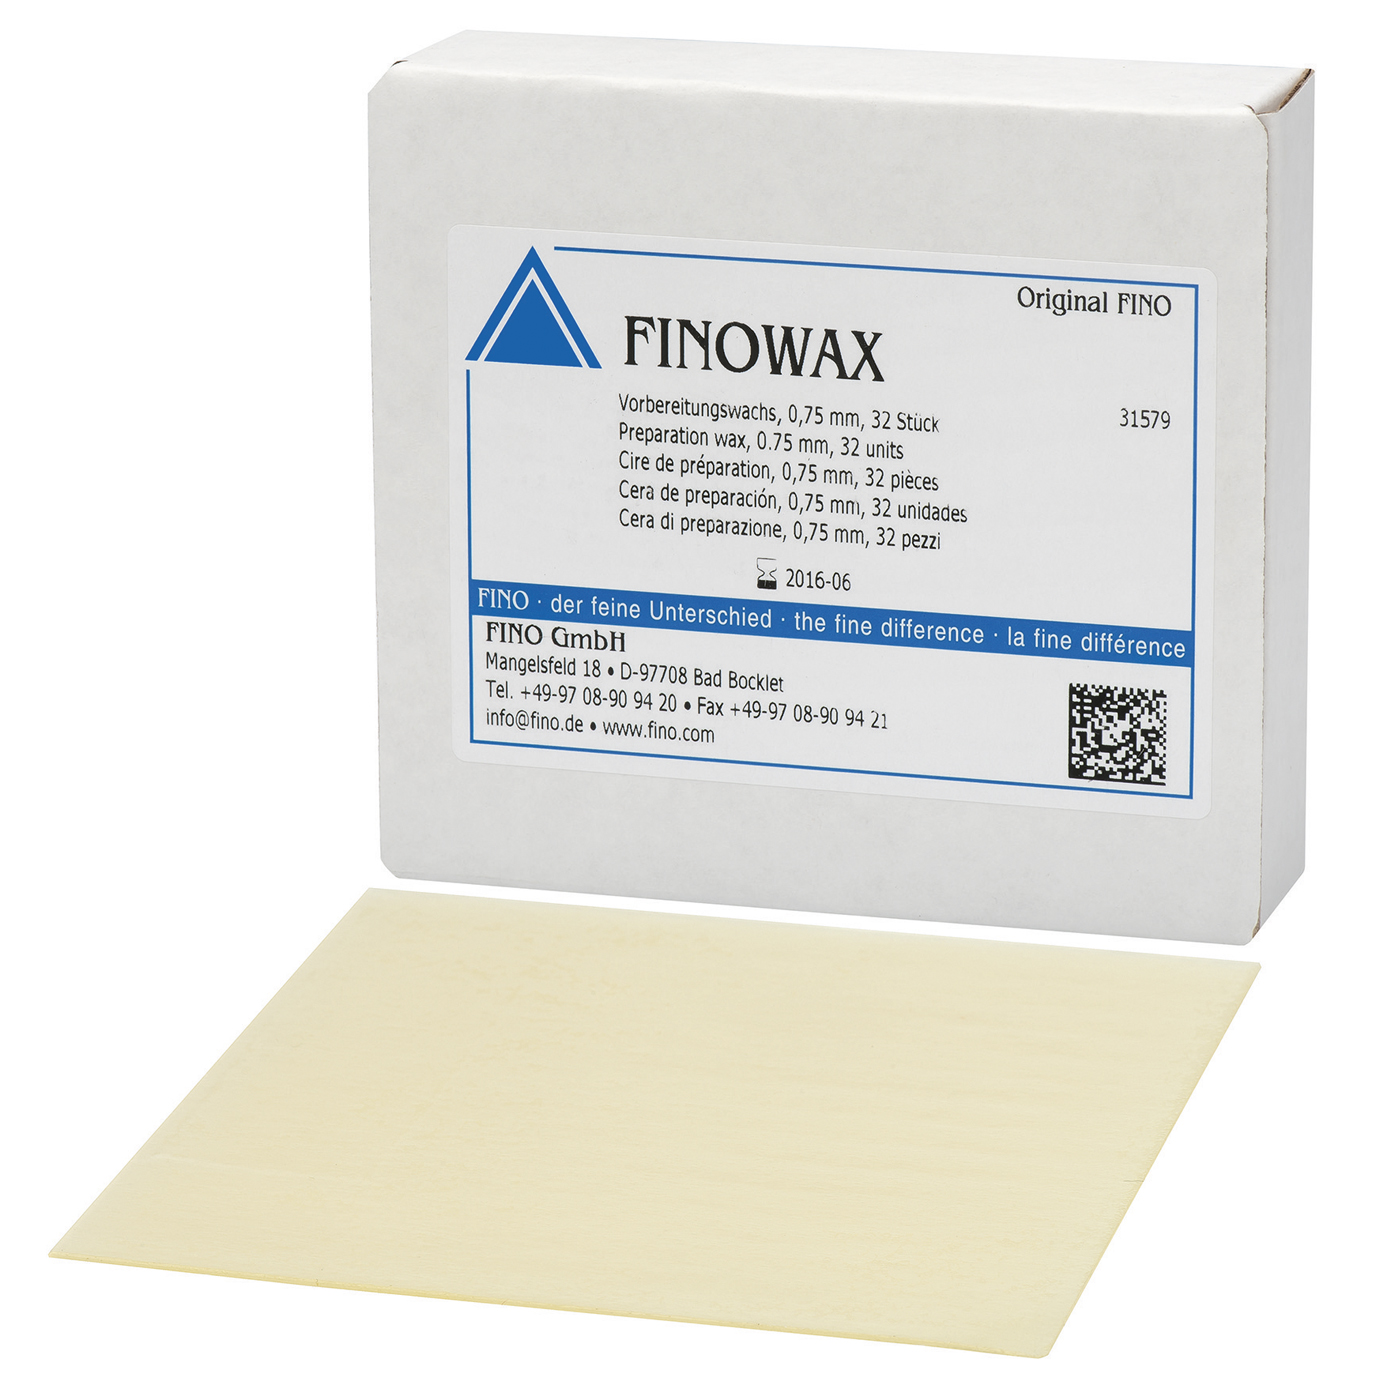 FINOWAX Preparation Wax, 0.75 mm - 32 pieces